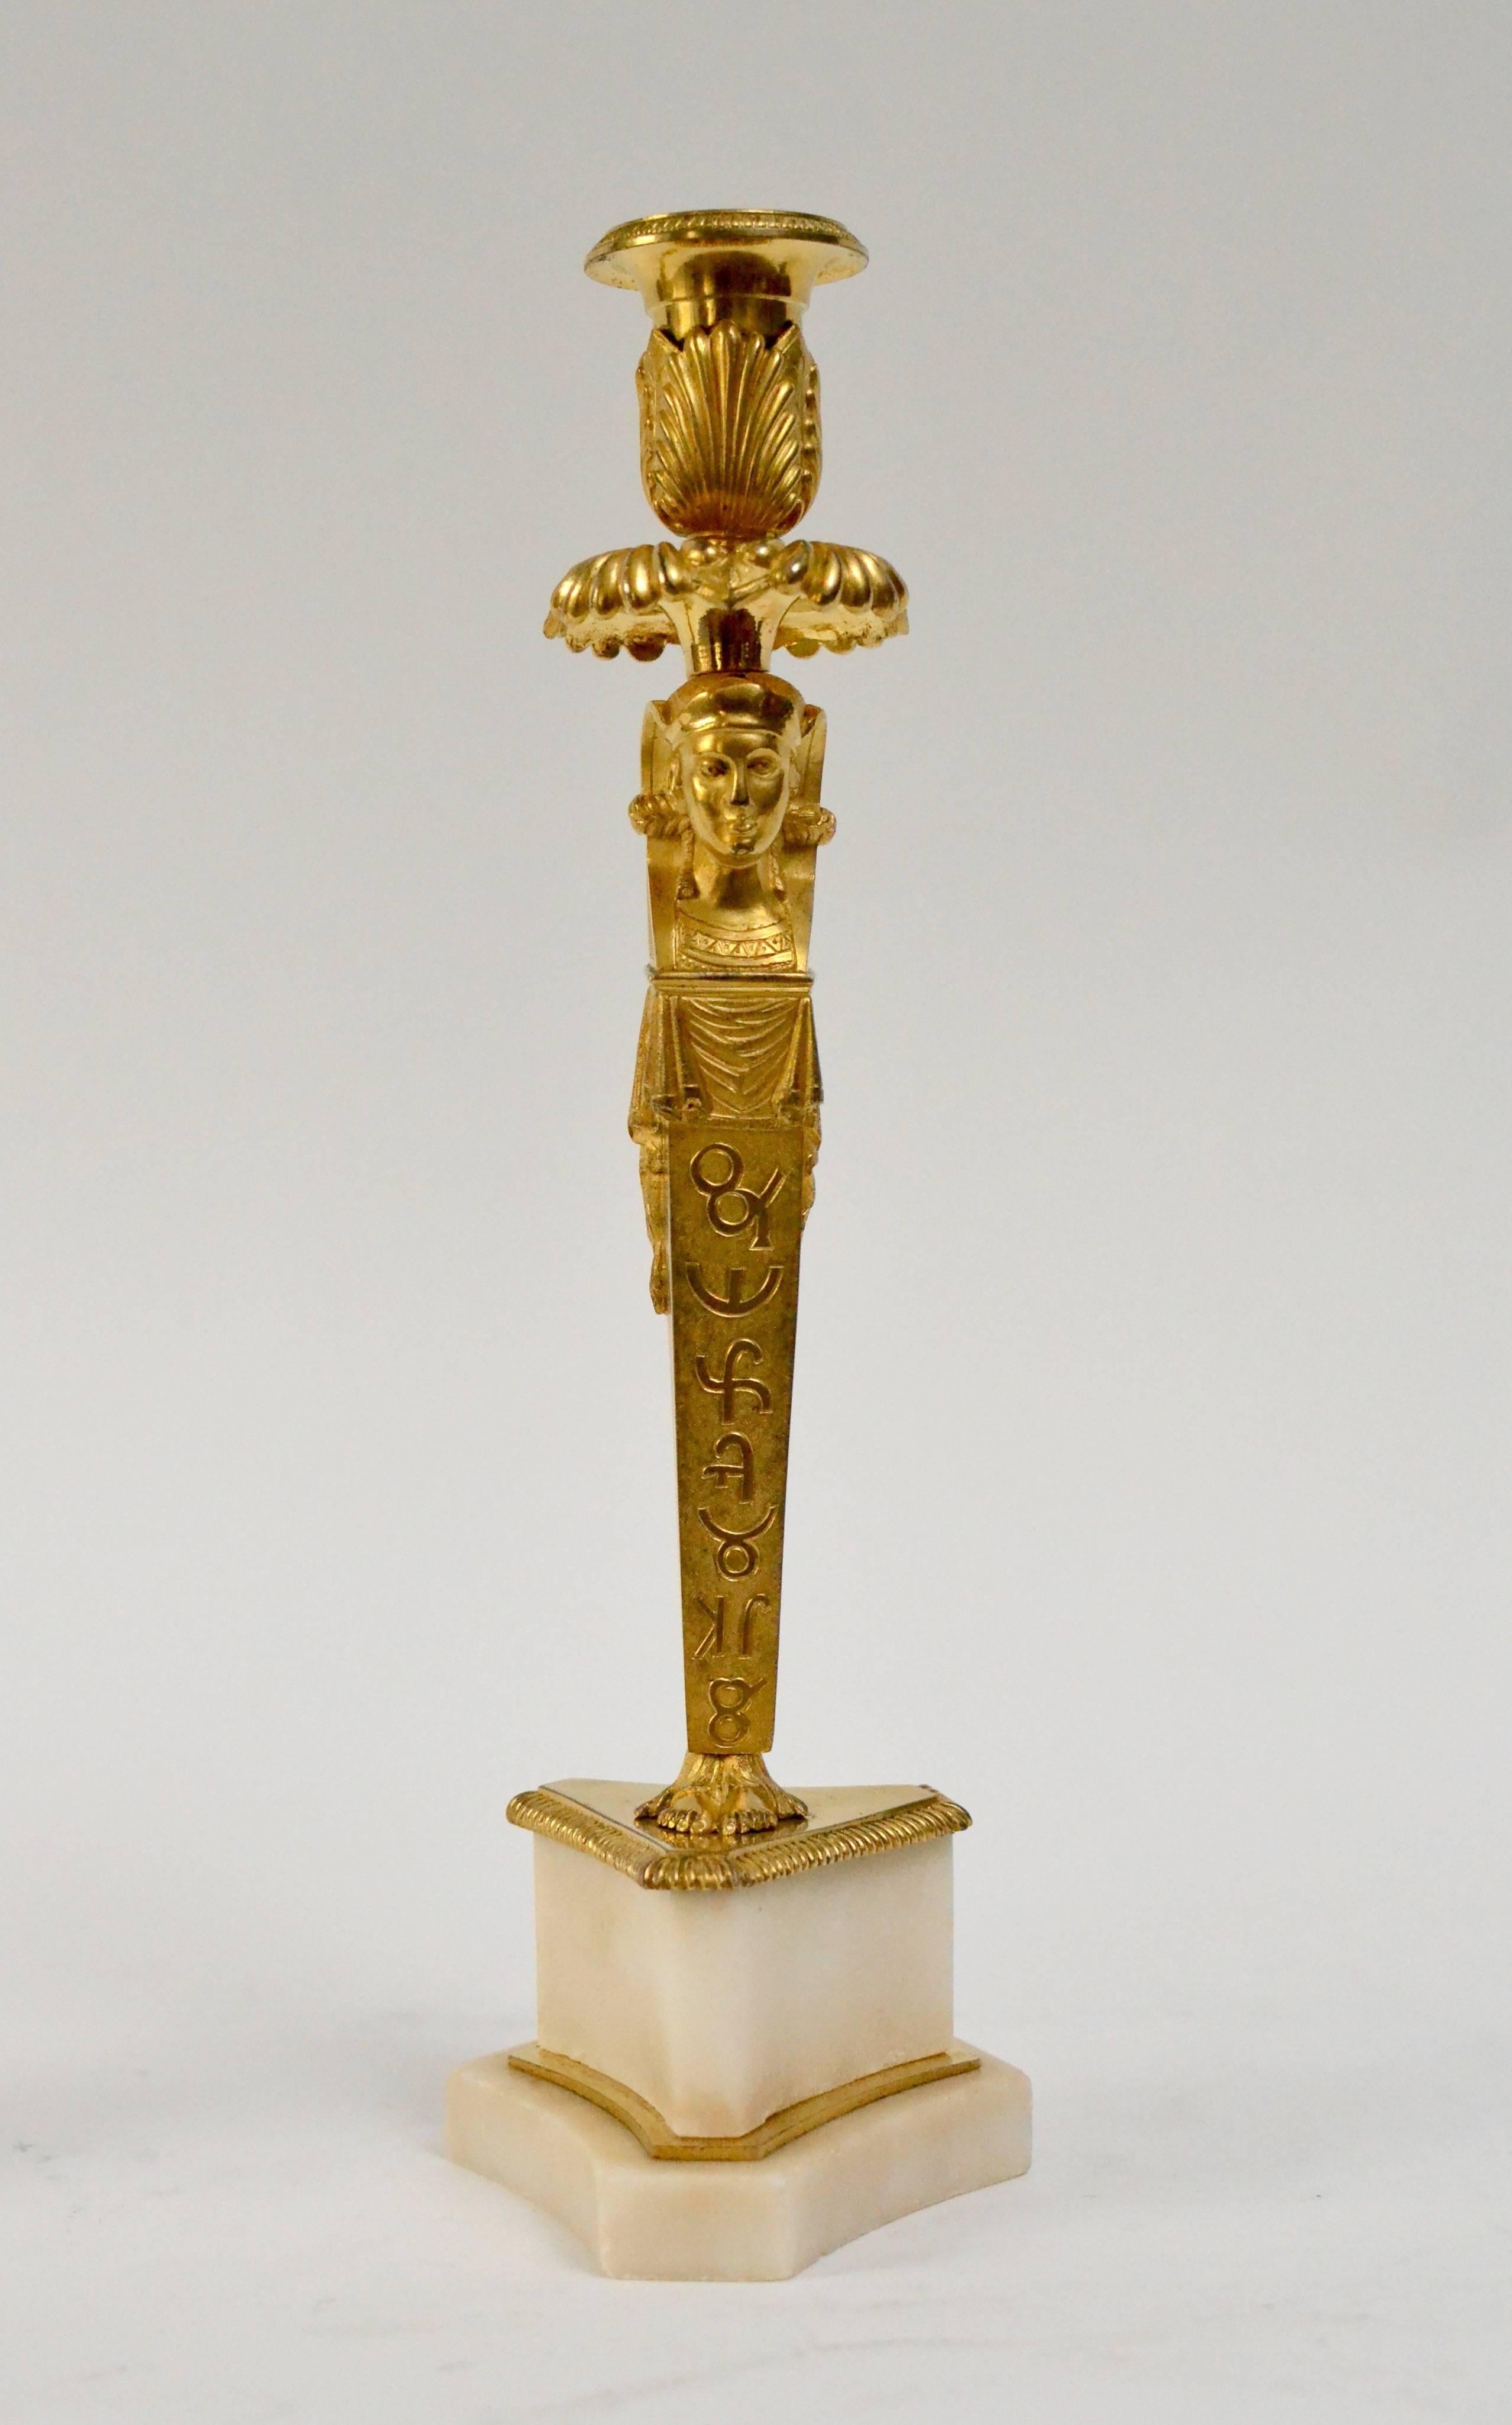 A rare pair of Egyptian style empire gilt bronze and marble candlesticks, circa 1800-1810.